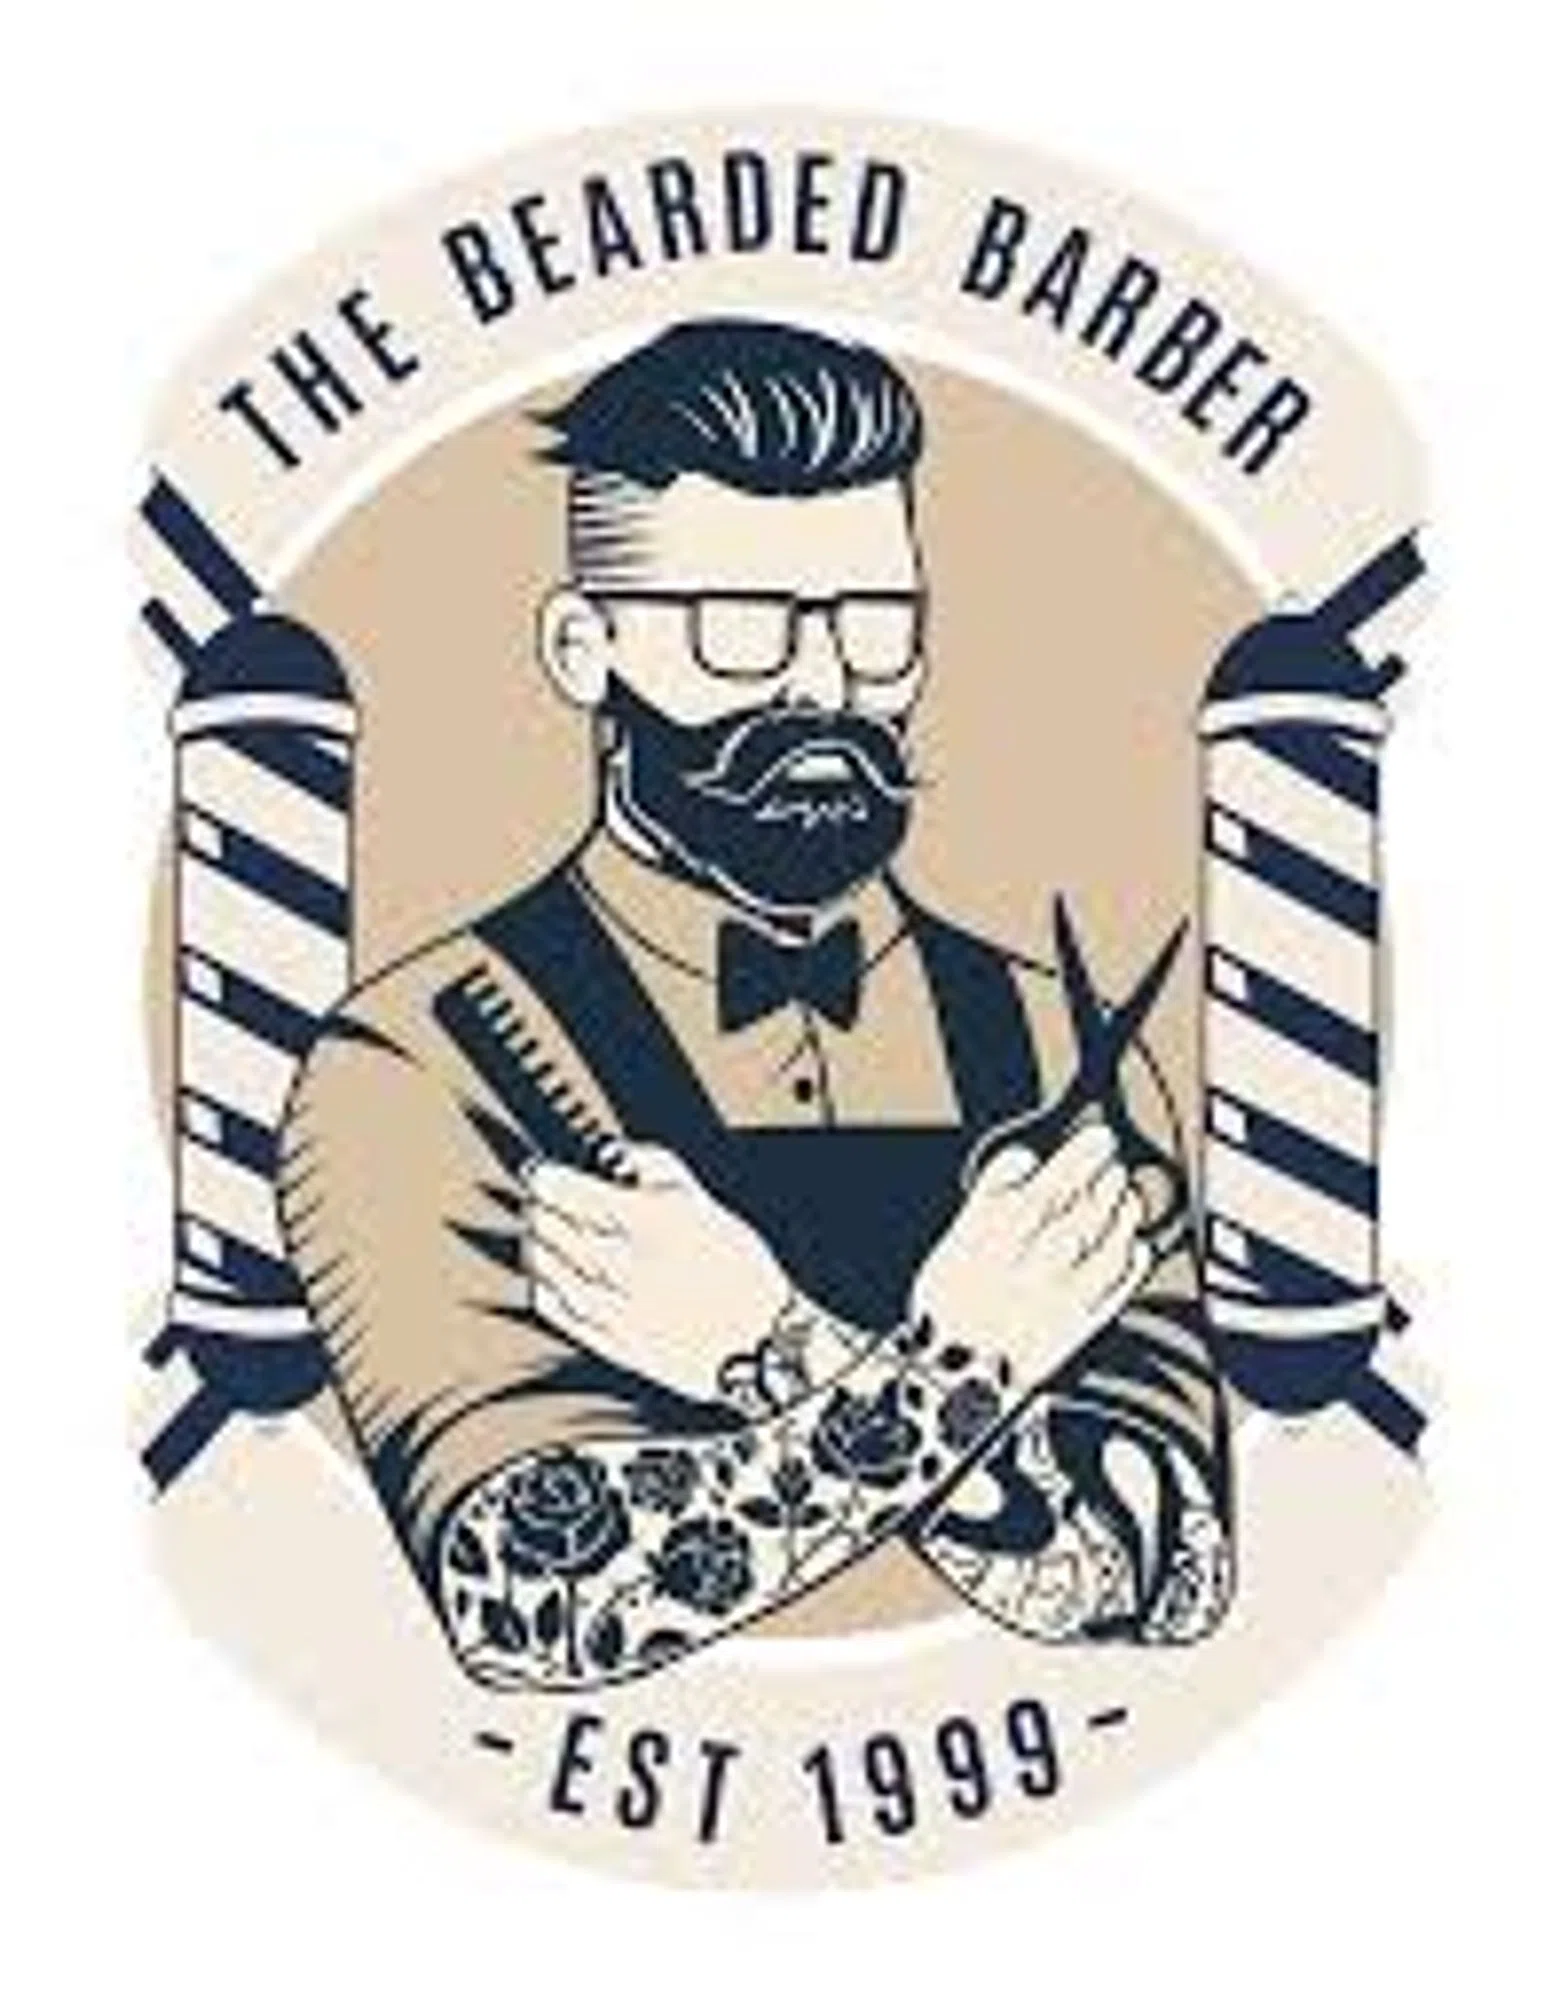 The Bearded Barber